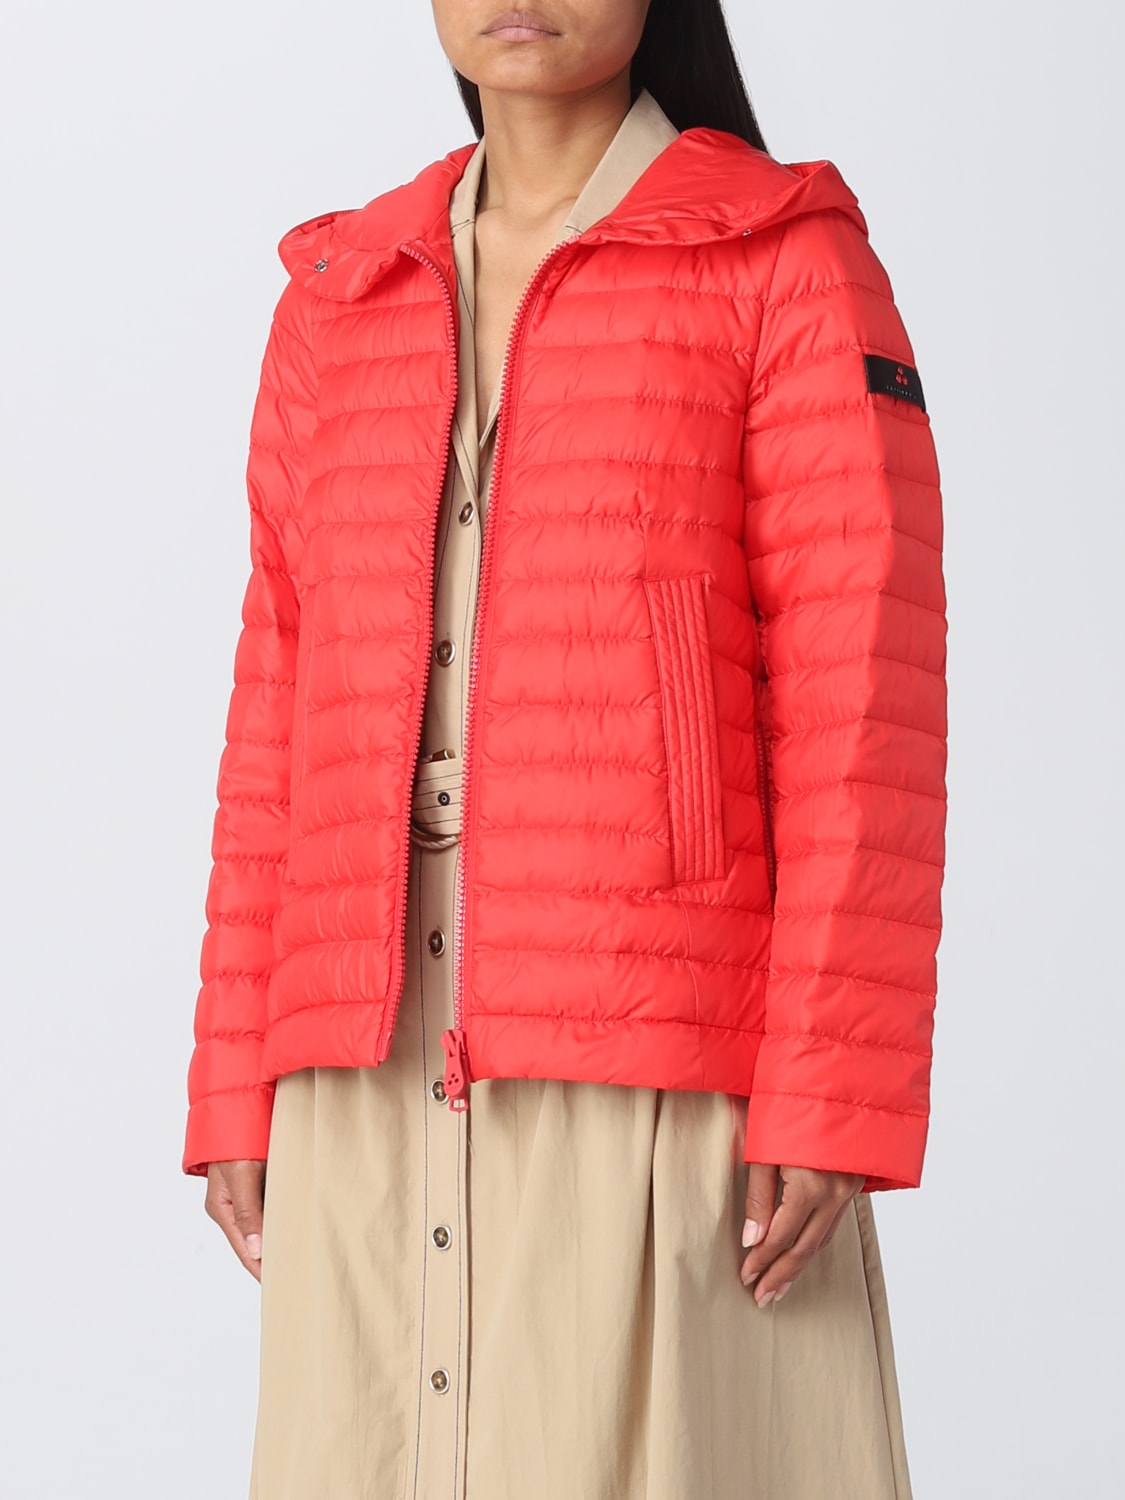 Jacket Peuterey: Peuterey jacket for women red 2